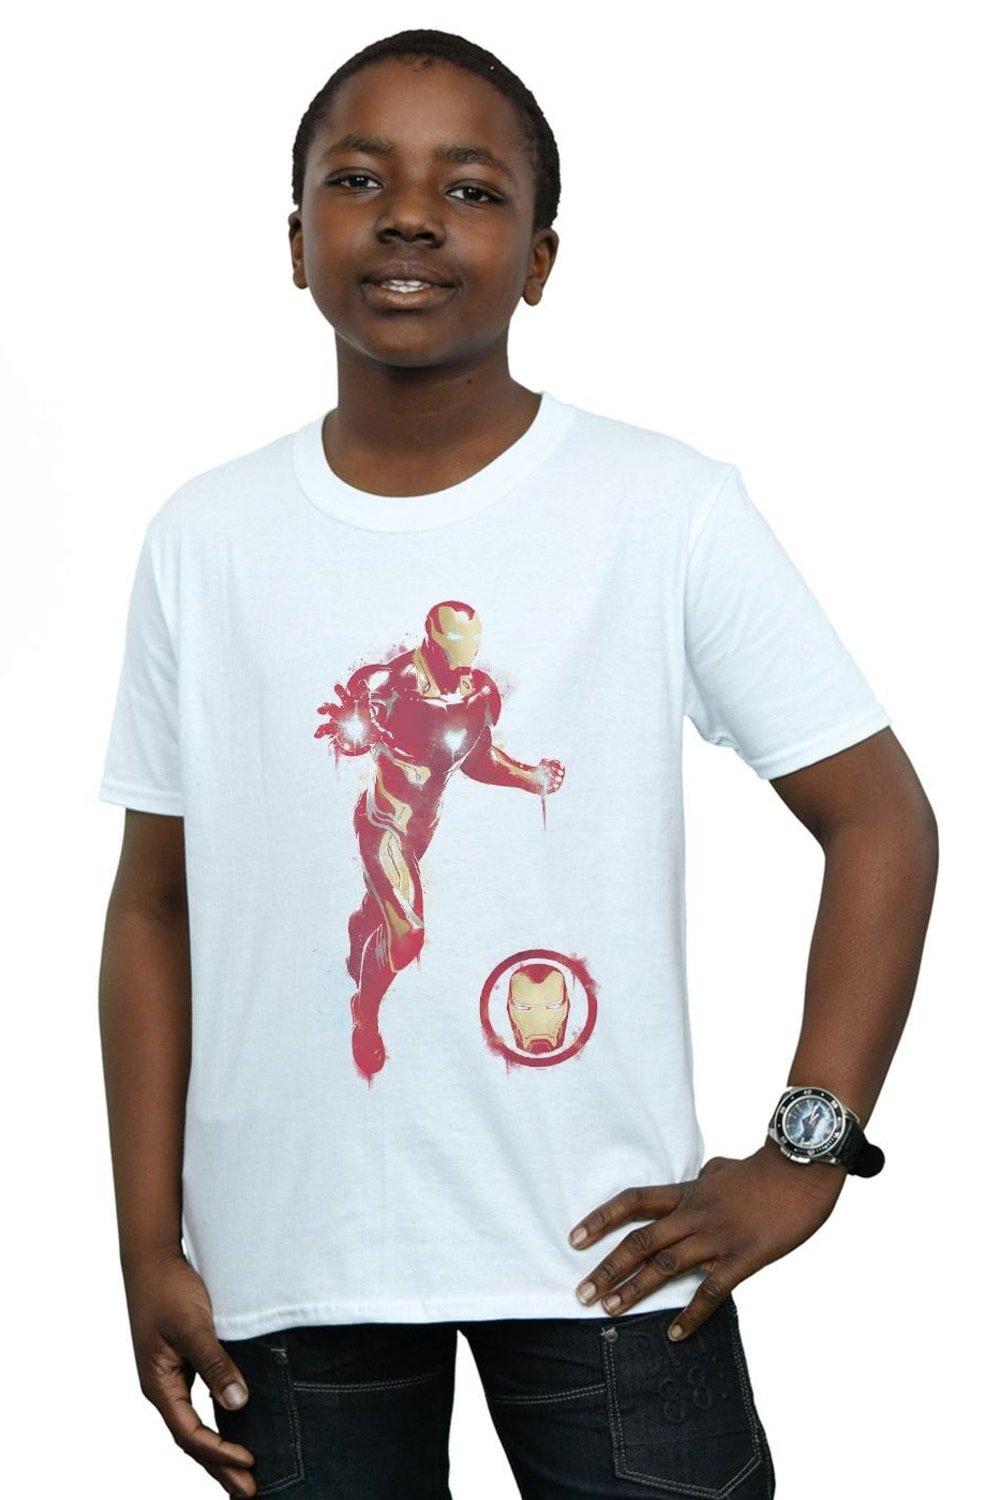 Avengers Endgame Painted Iron Man T-Shirt